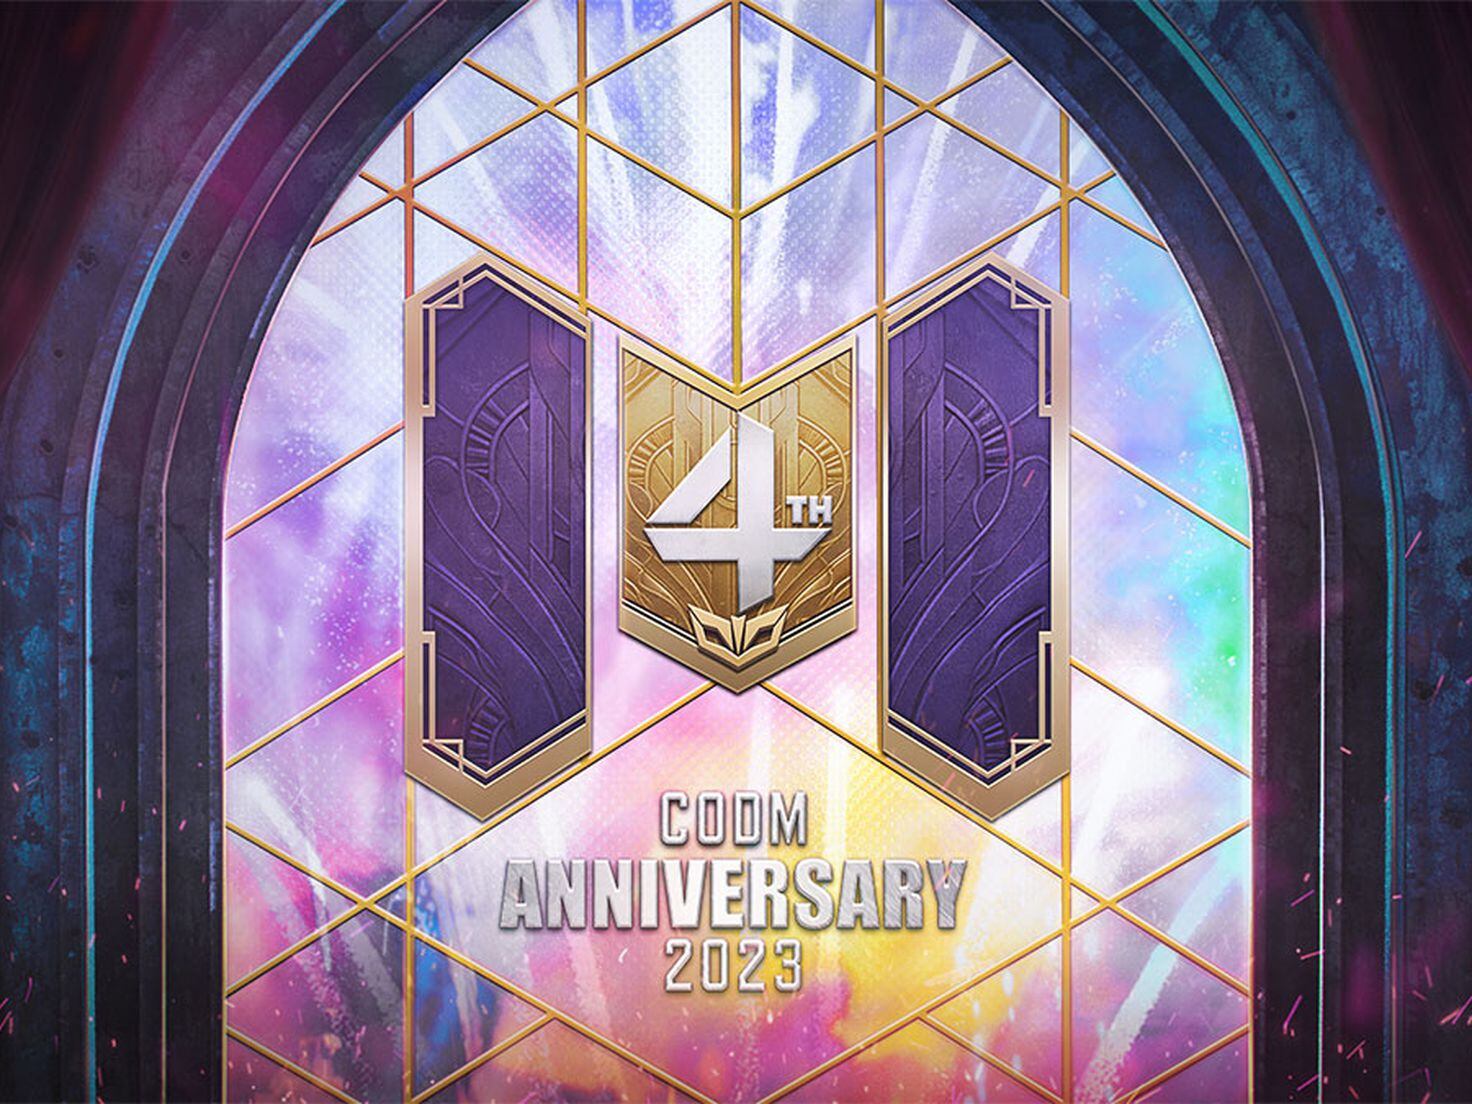 Free Legendary M4 on Anniversary? 4 New Codes & Club!